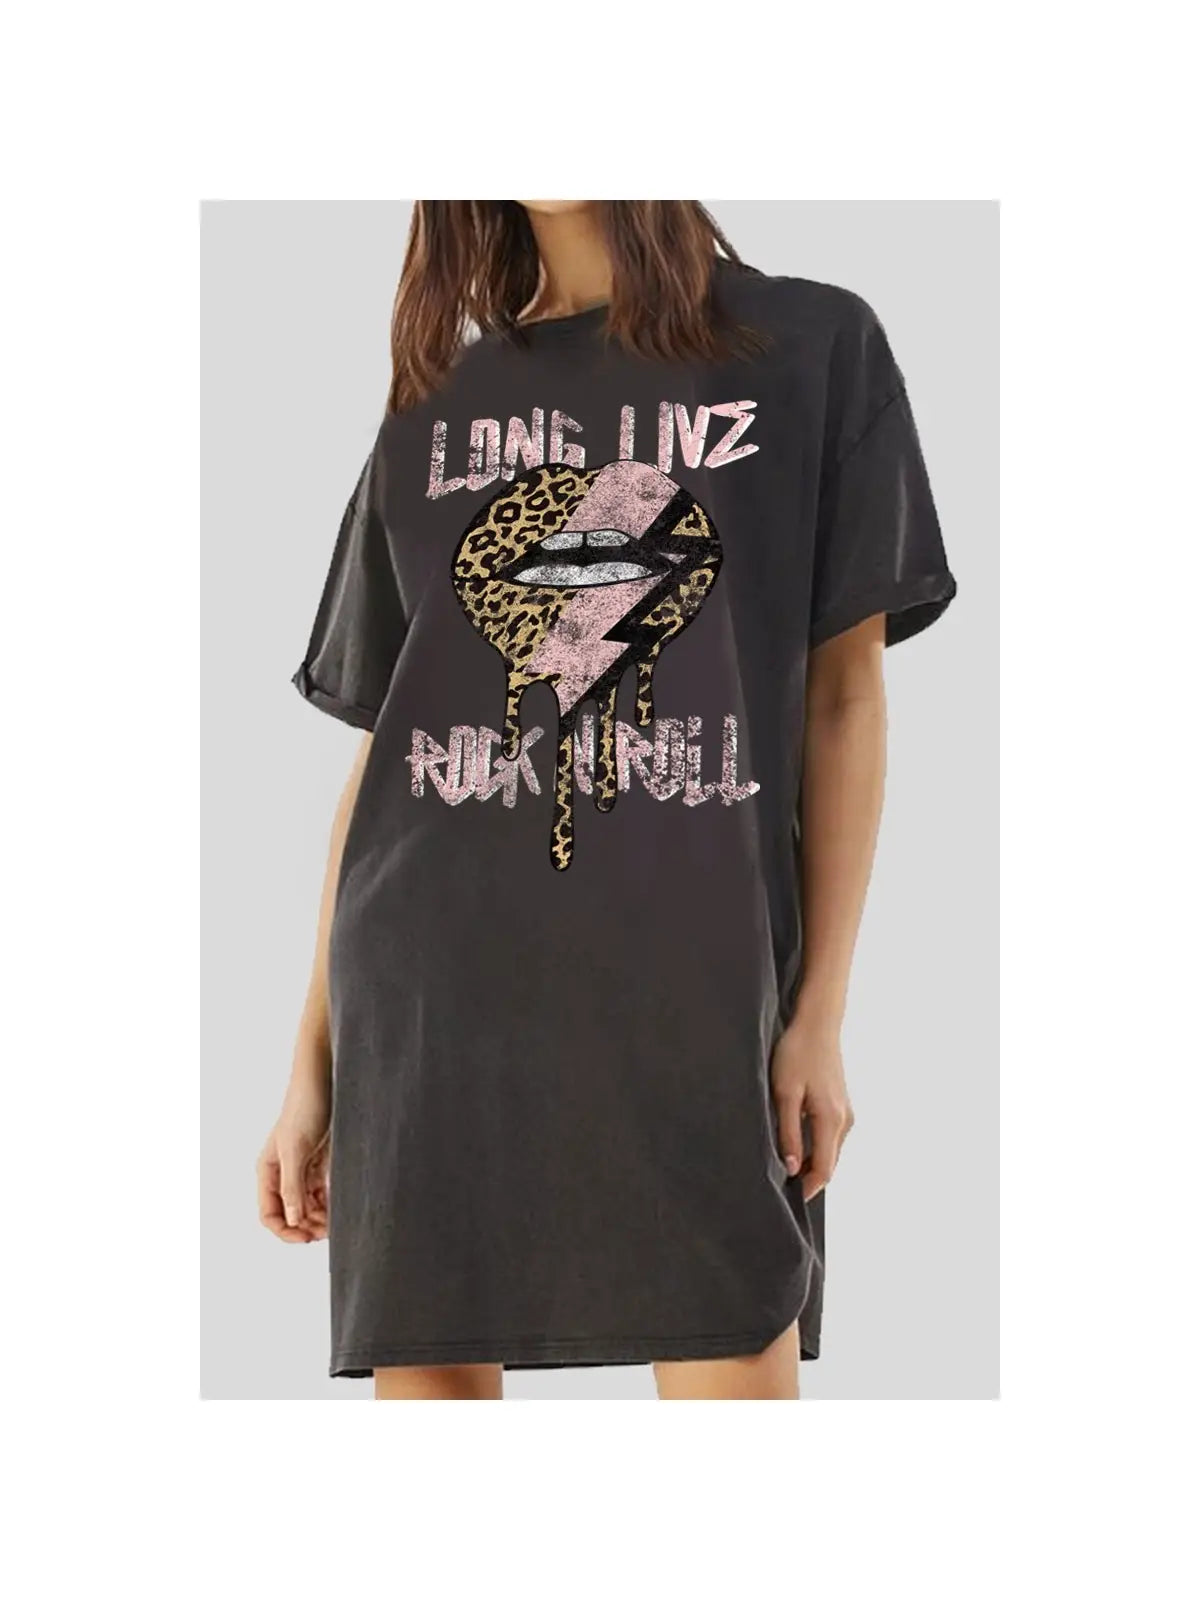 Long Live Rock N Roll Lips Graphic Dress